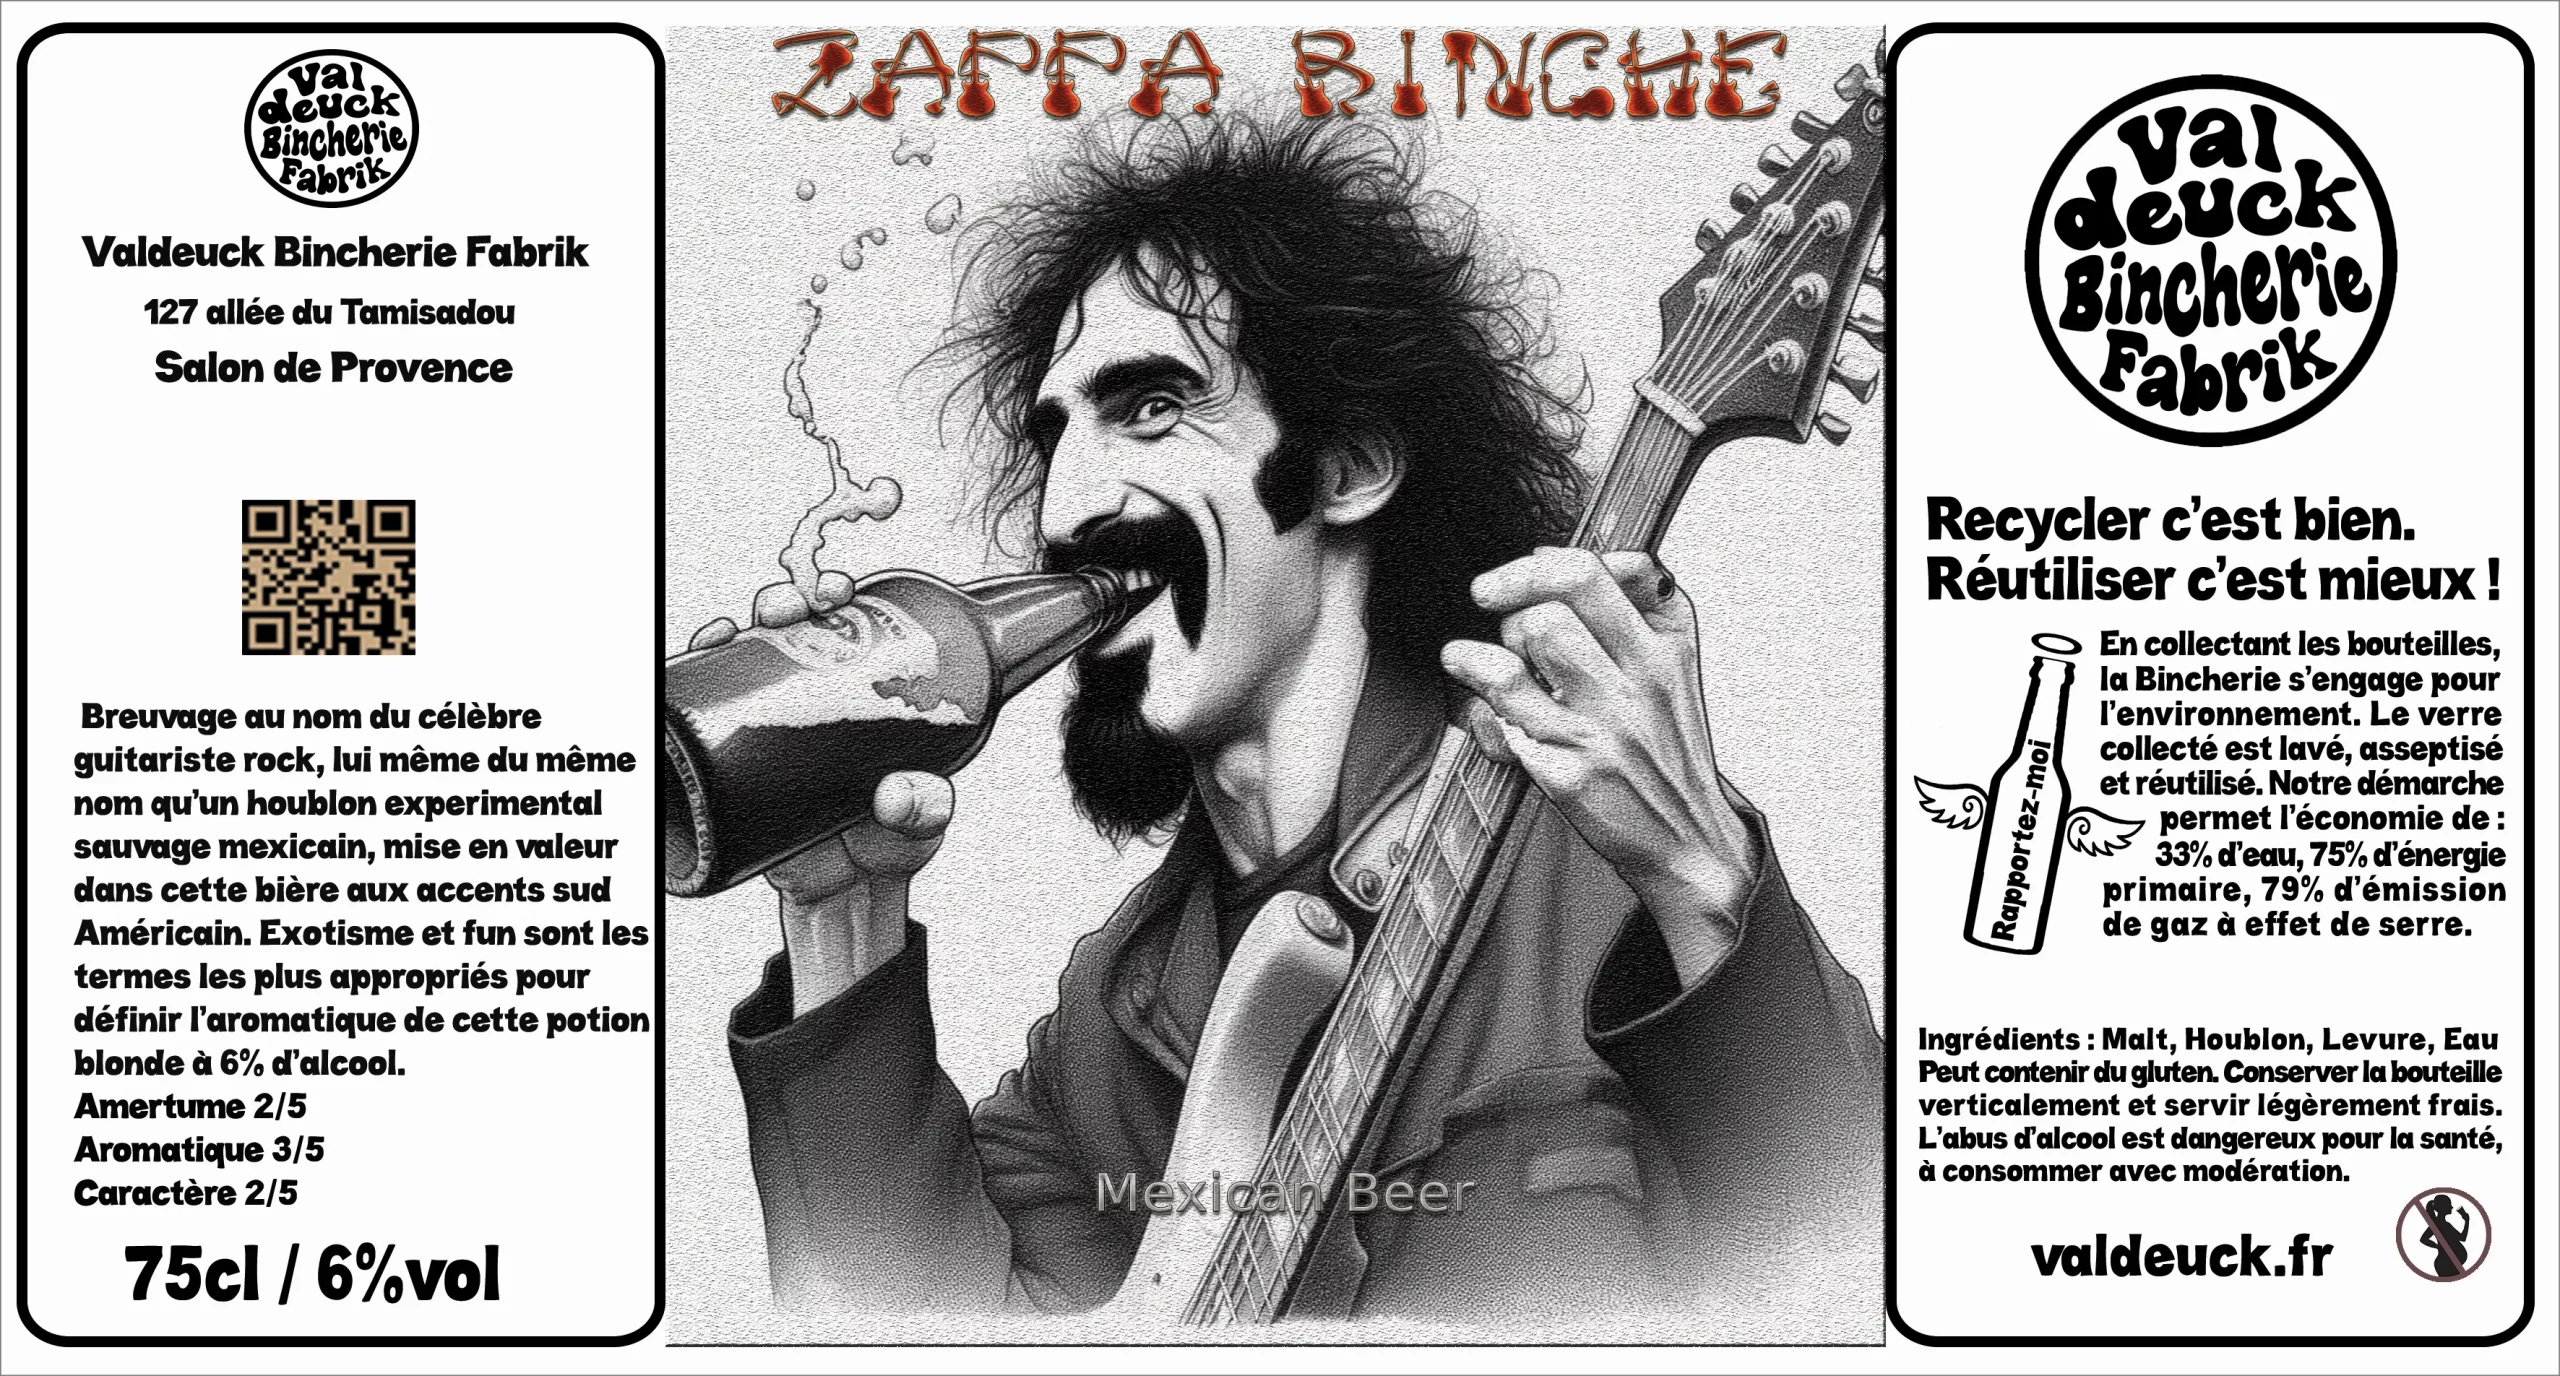 La Zappa (75cl) valdeuck bincherie fabrik salon de provence